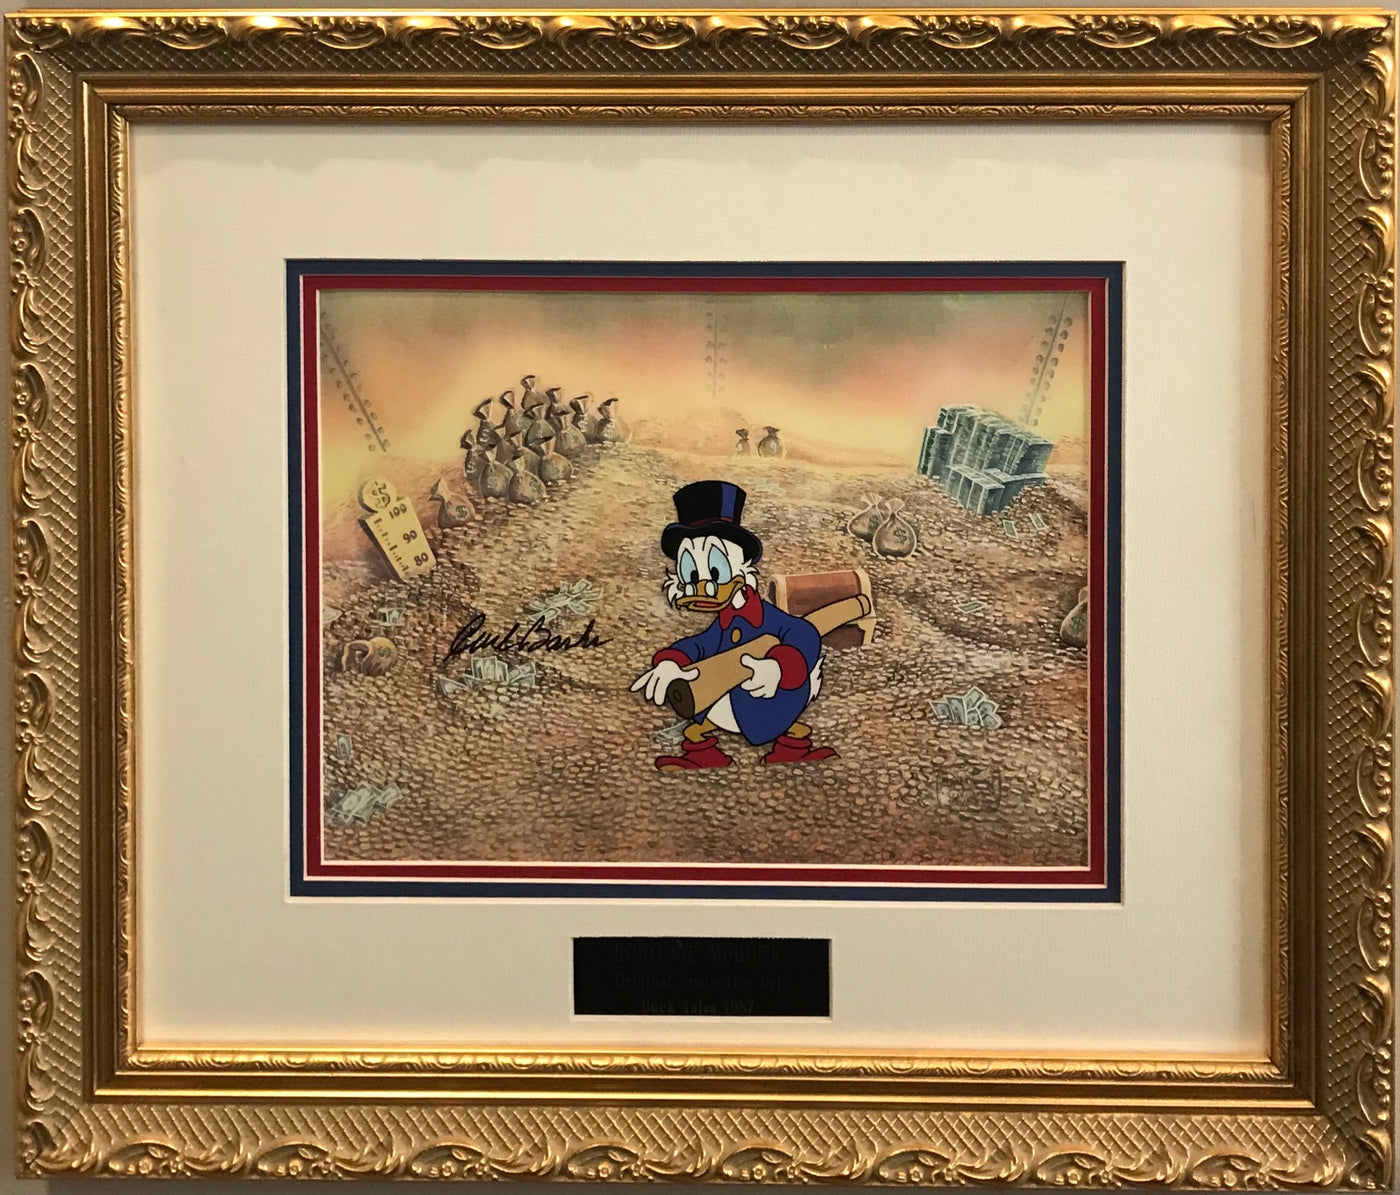 Original Walt Disney Production Cel from Duck Tales featuring Scrooge McDuck